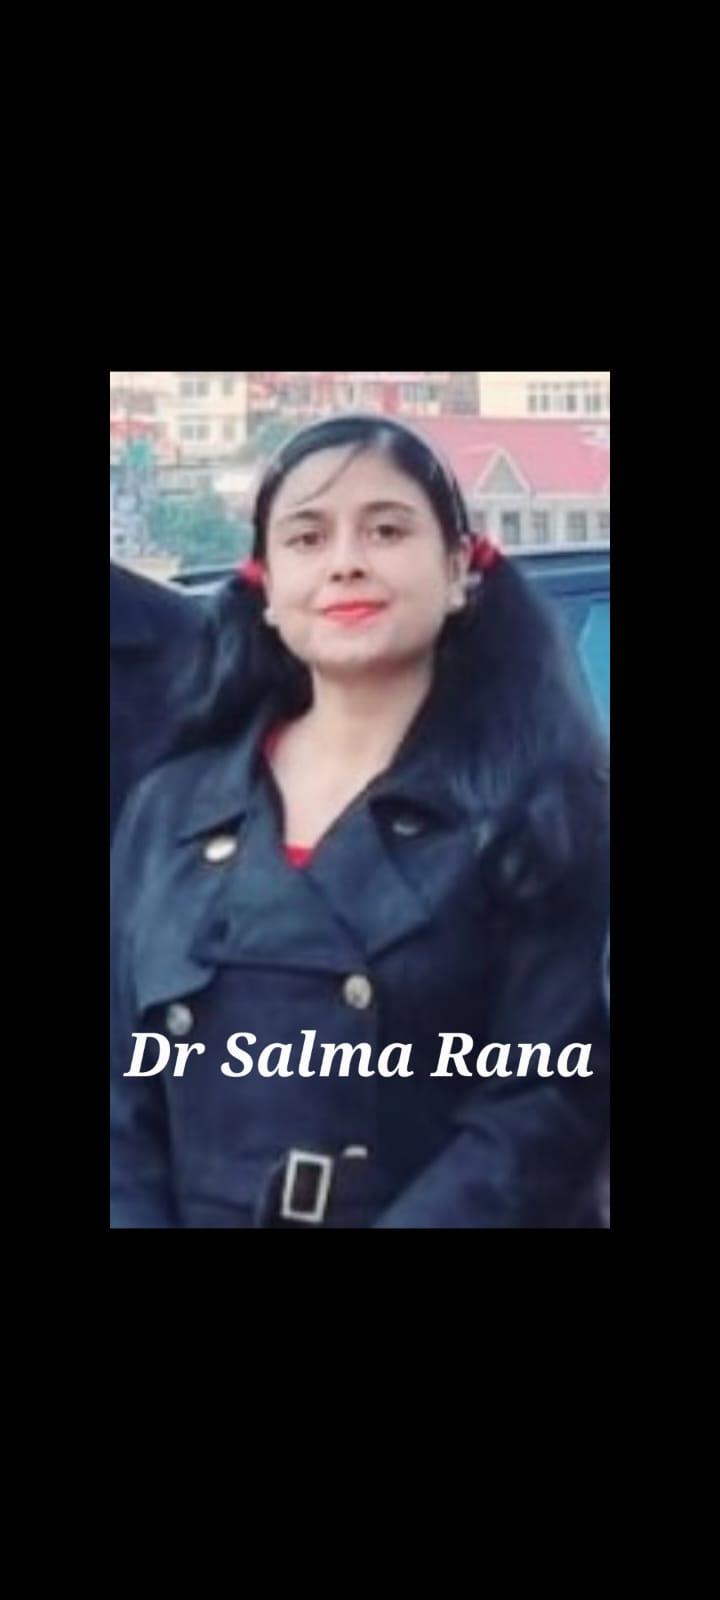 Dr. Salma rana